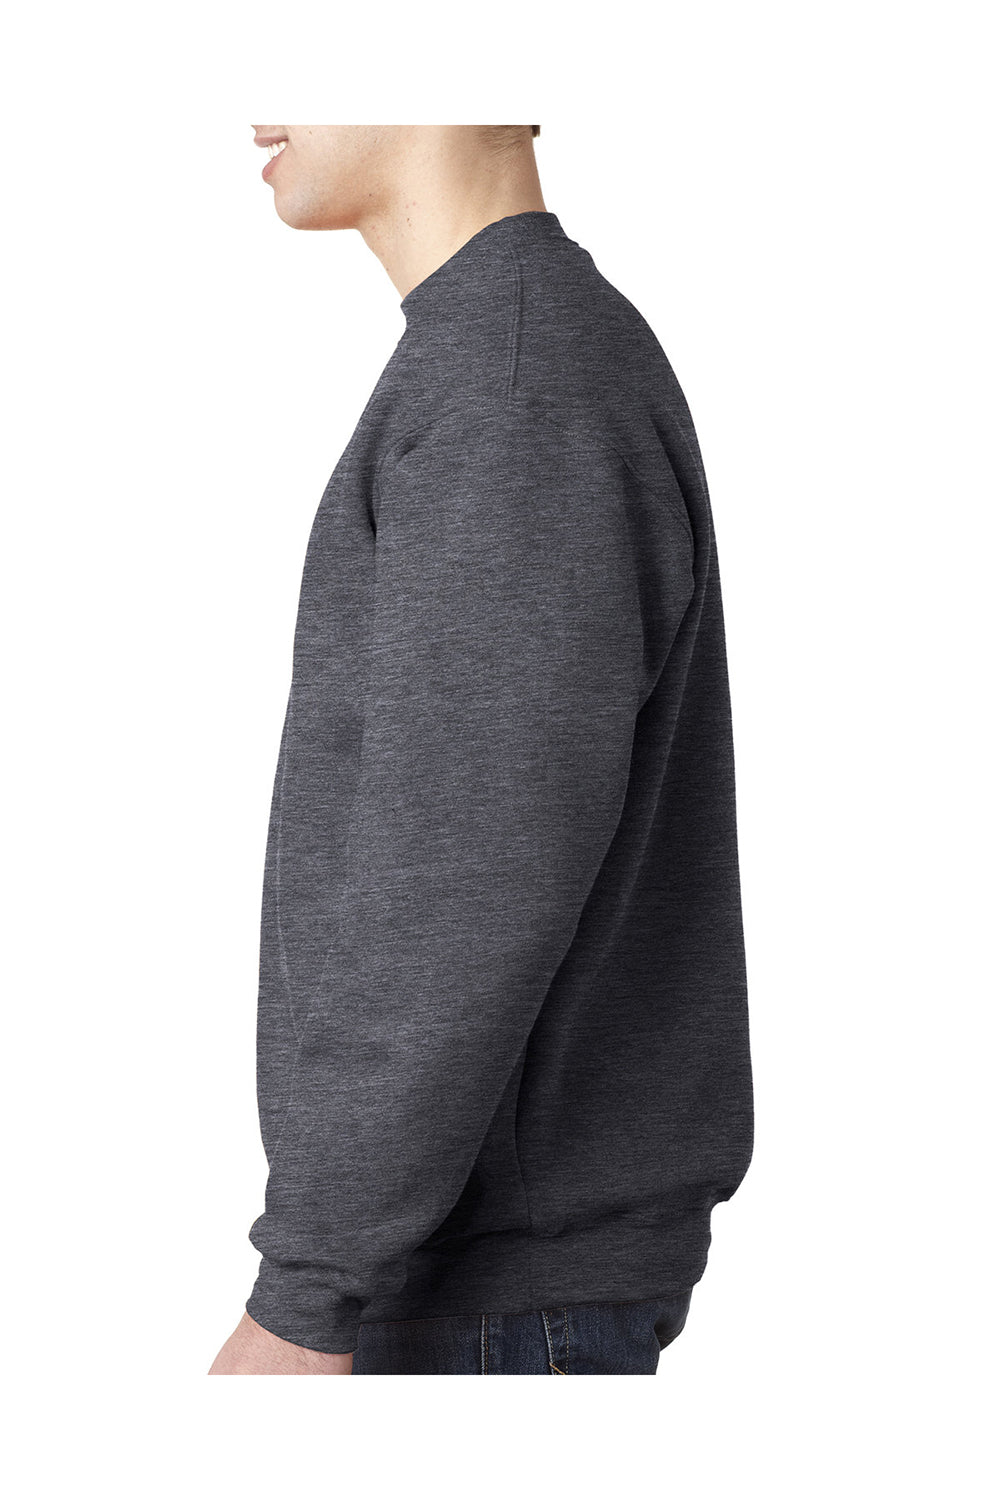 Bayside BA1102 Mens USA Made Crewneck Sweatshirt Heather Charcoal Grey Model Side